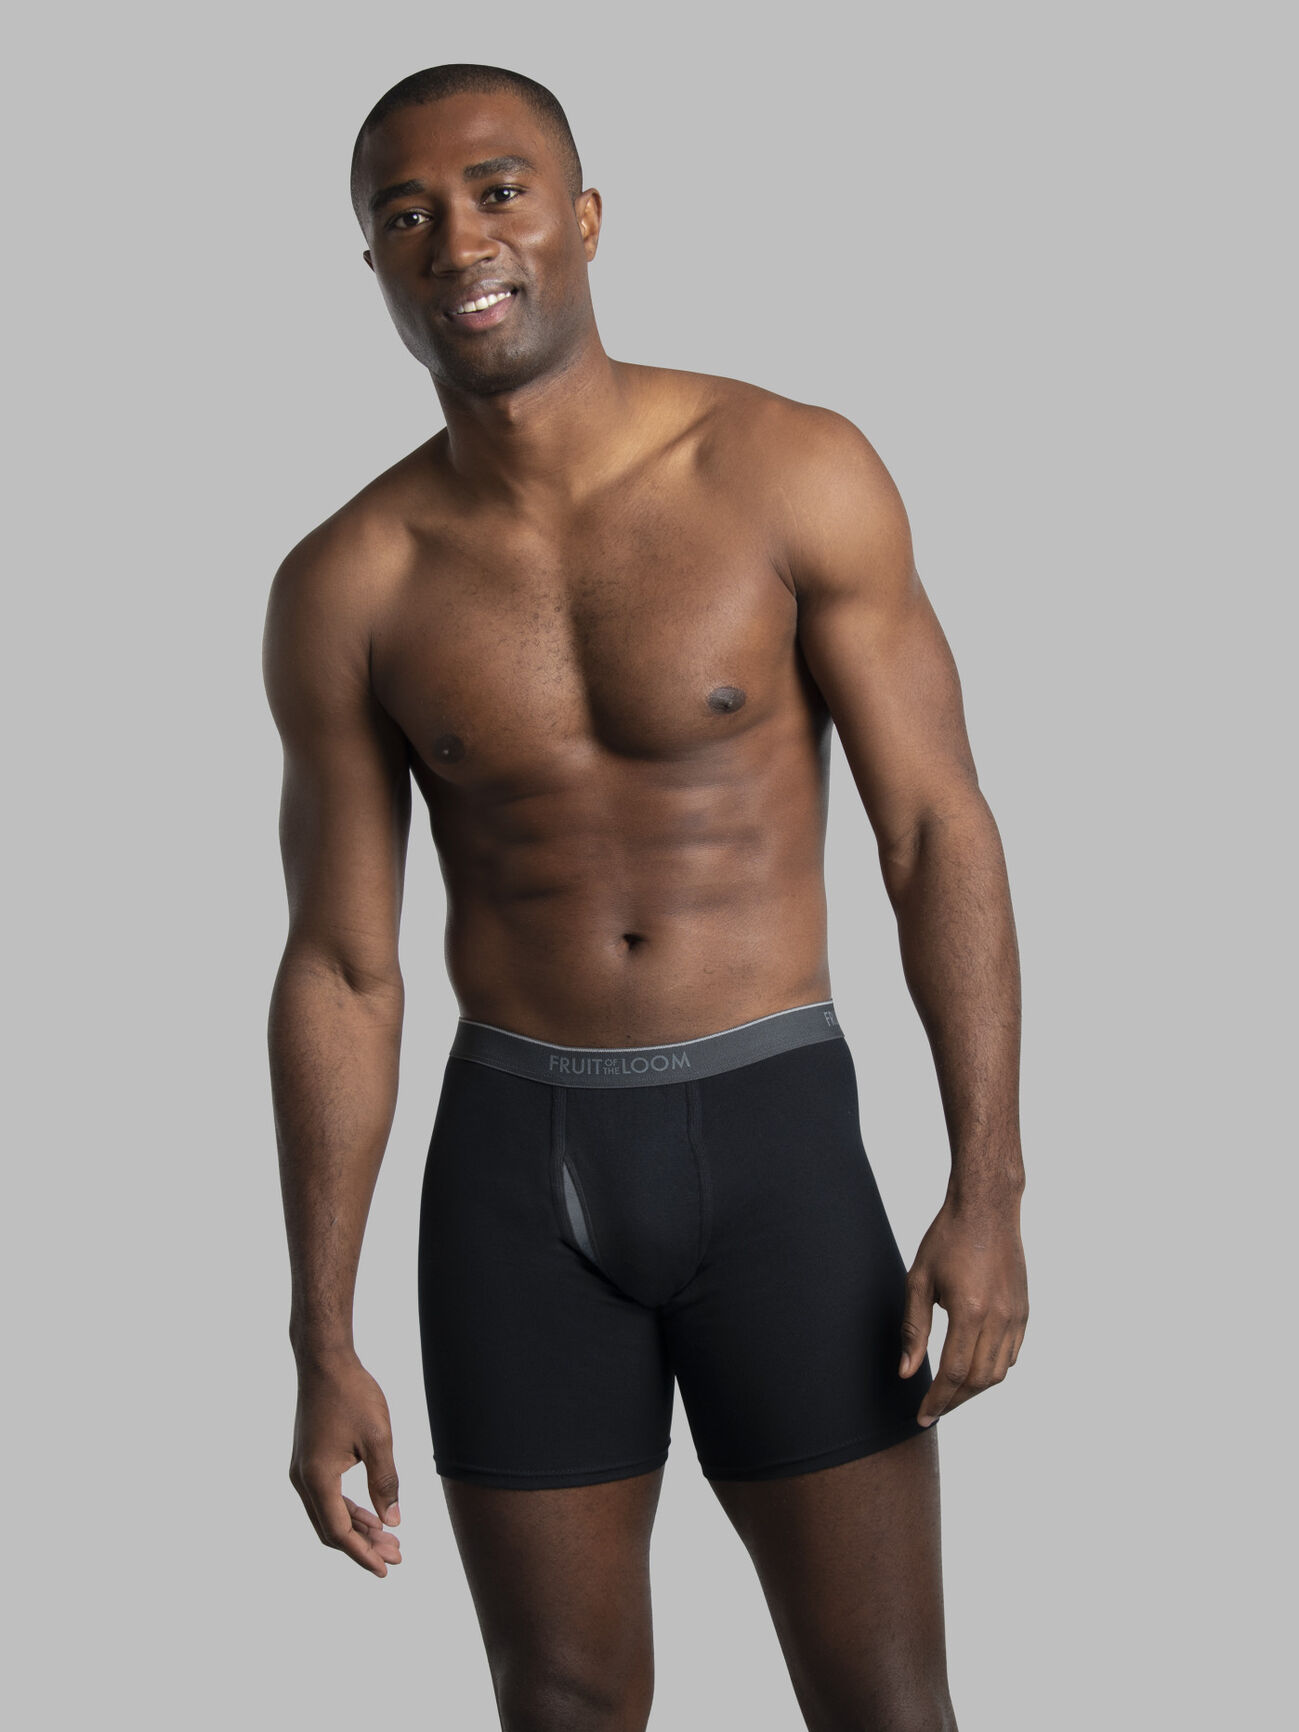 New Balance Black 6 Boxer Briefs Underwear 2 in Box New in Box